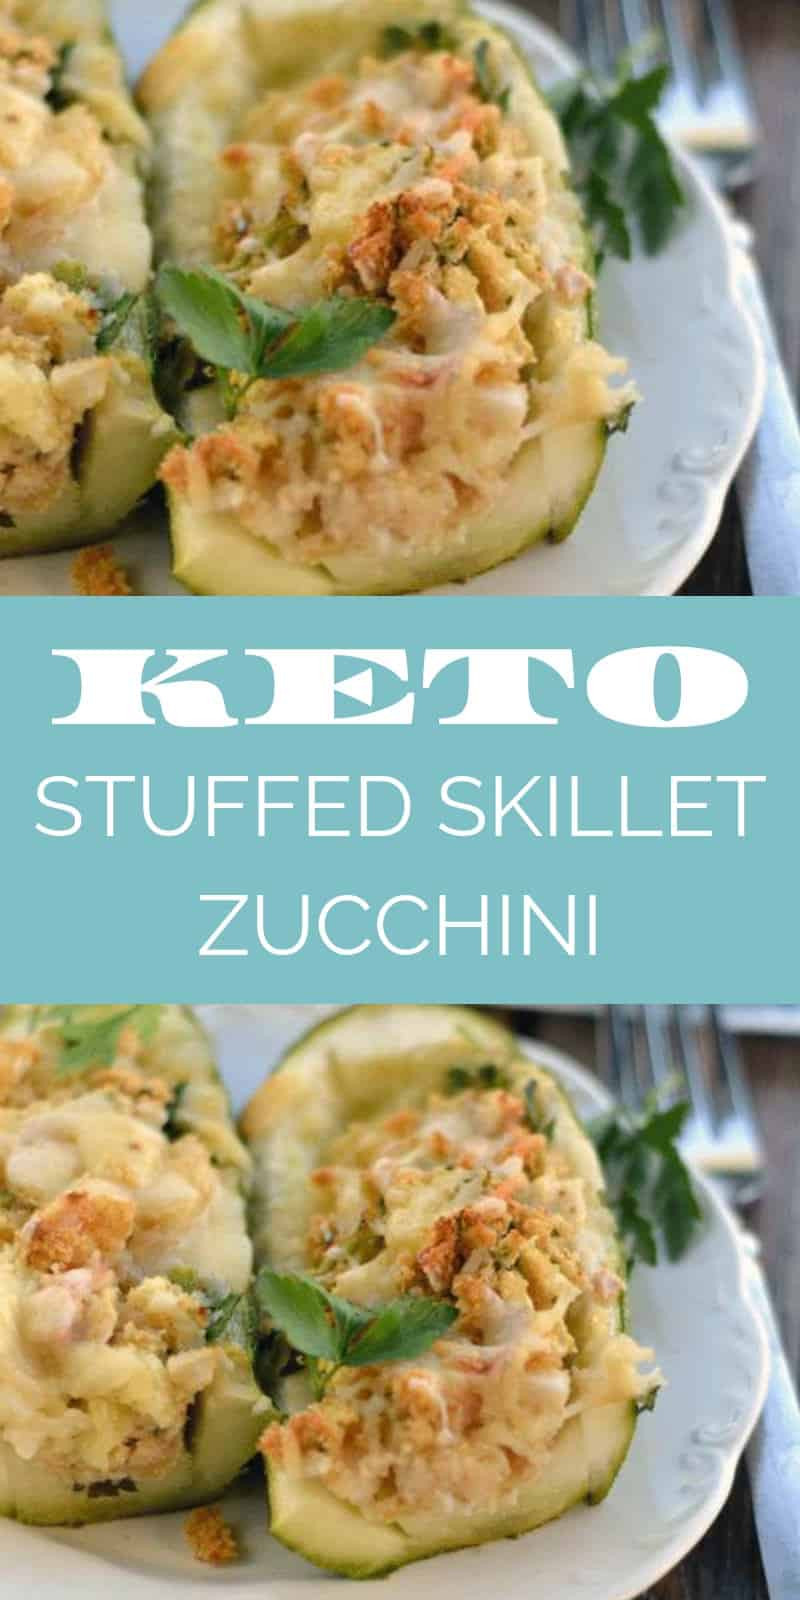 Stuffed Zucchini Keto
 Keto Skillet Stuffed Zucchini with Crab and Cheese